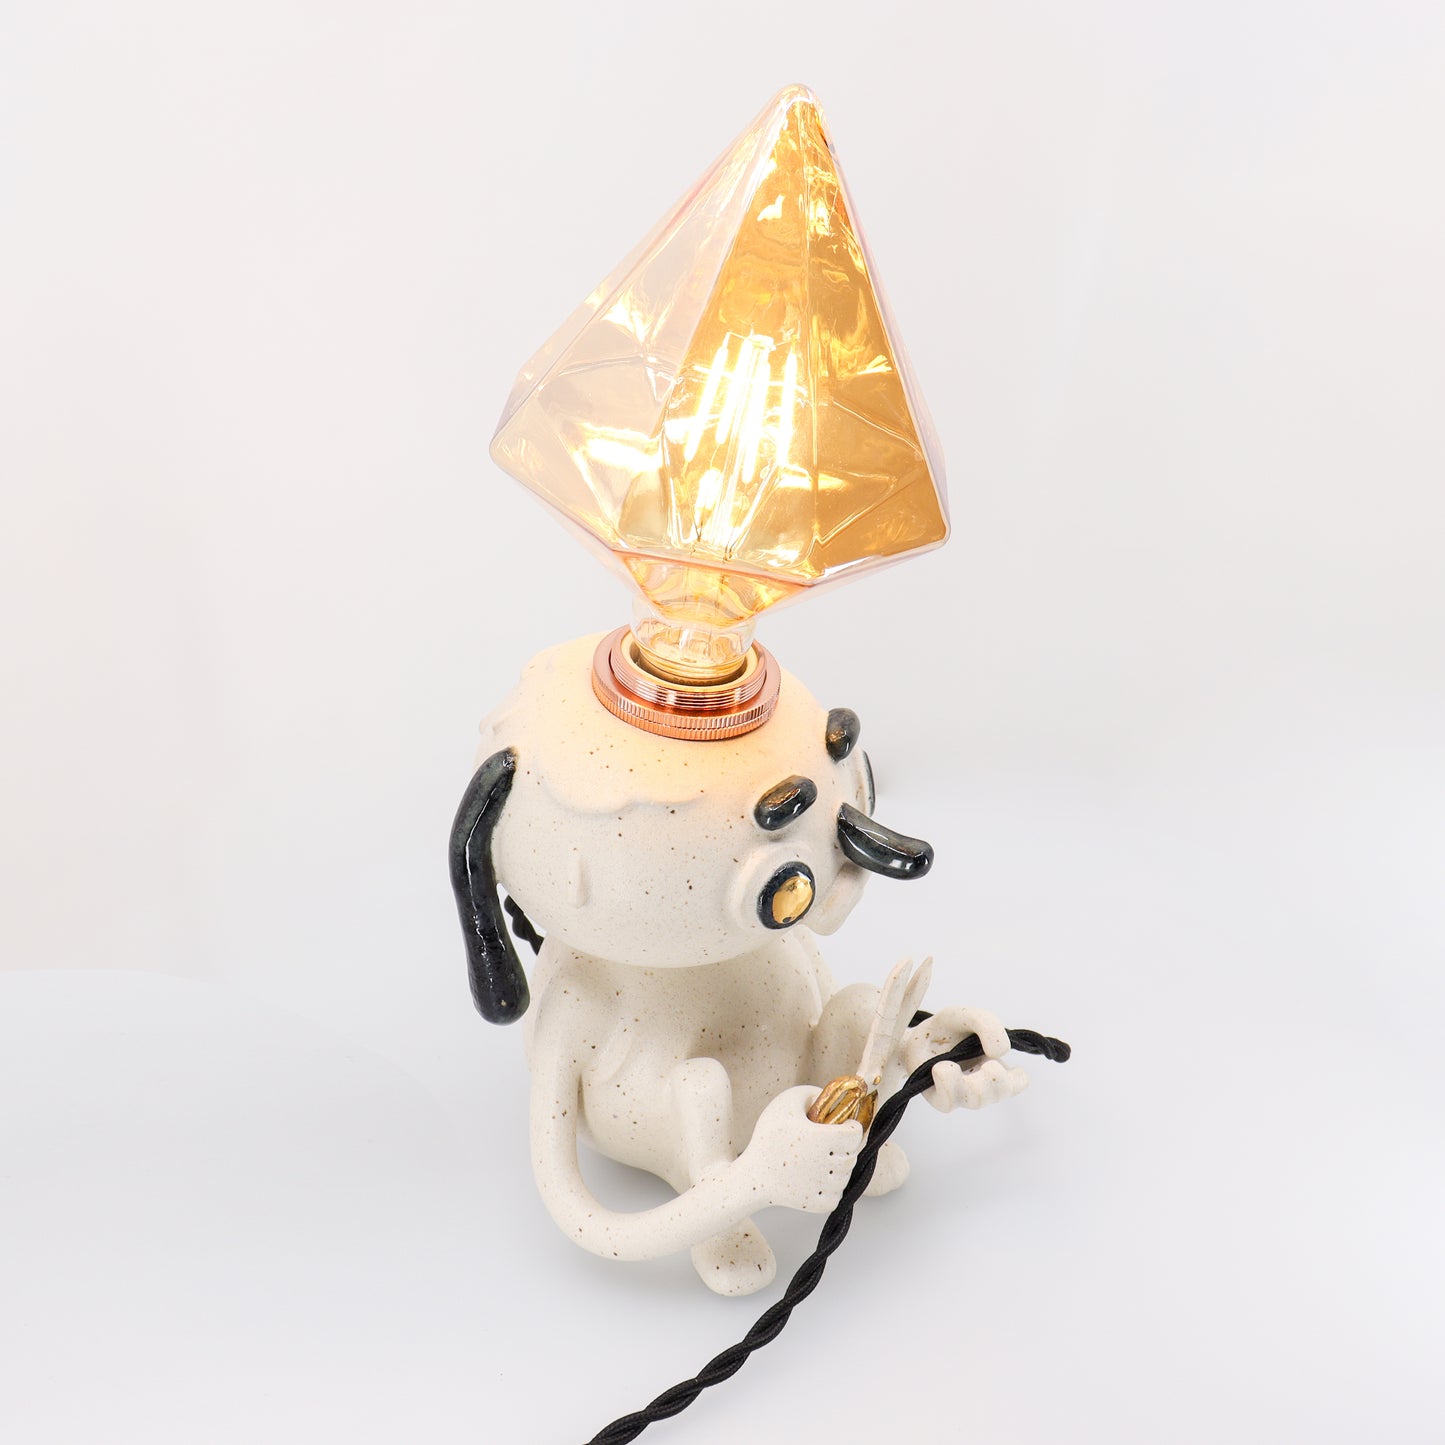 "Purgatory" Lamp